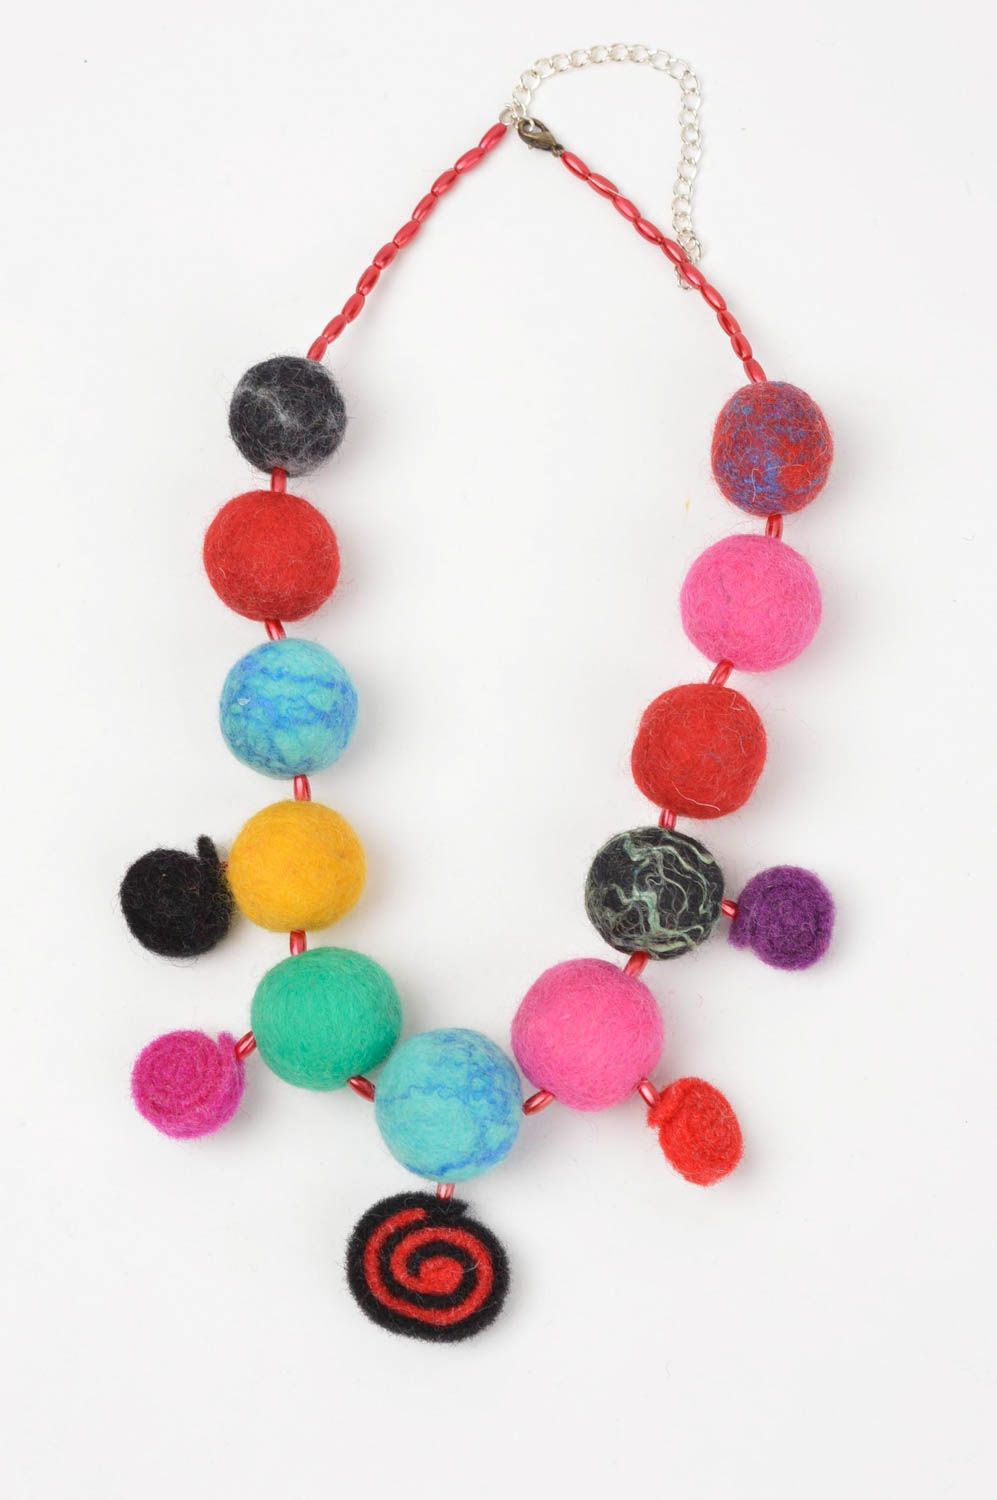 Handmade felt necklace woolen accessories for women stylish fabric jewelry photo 3